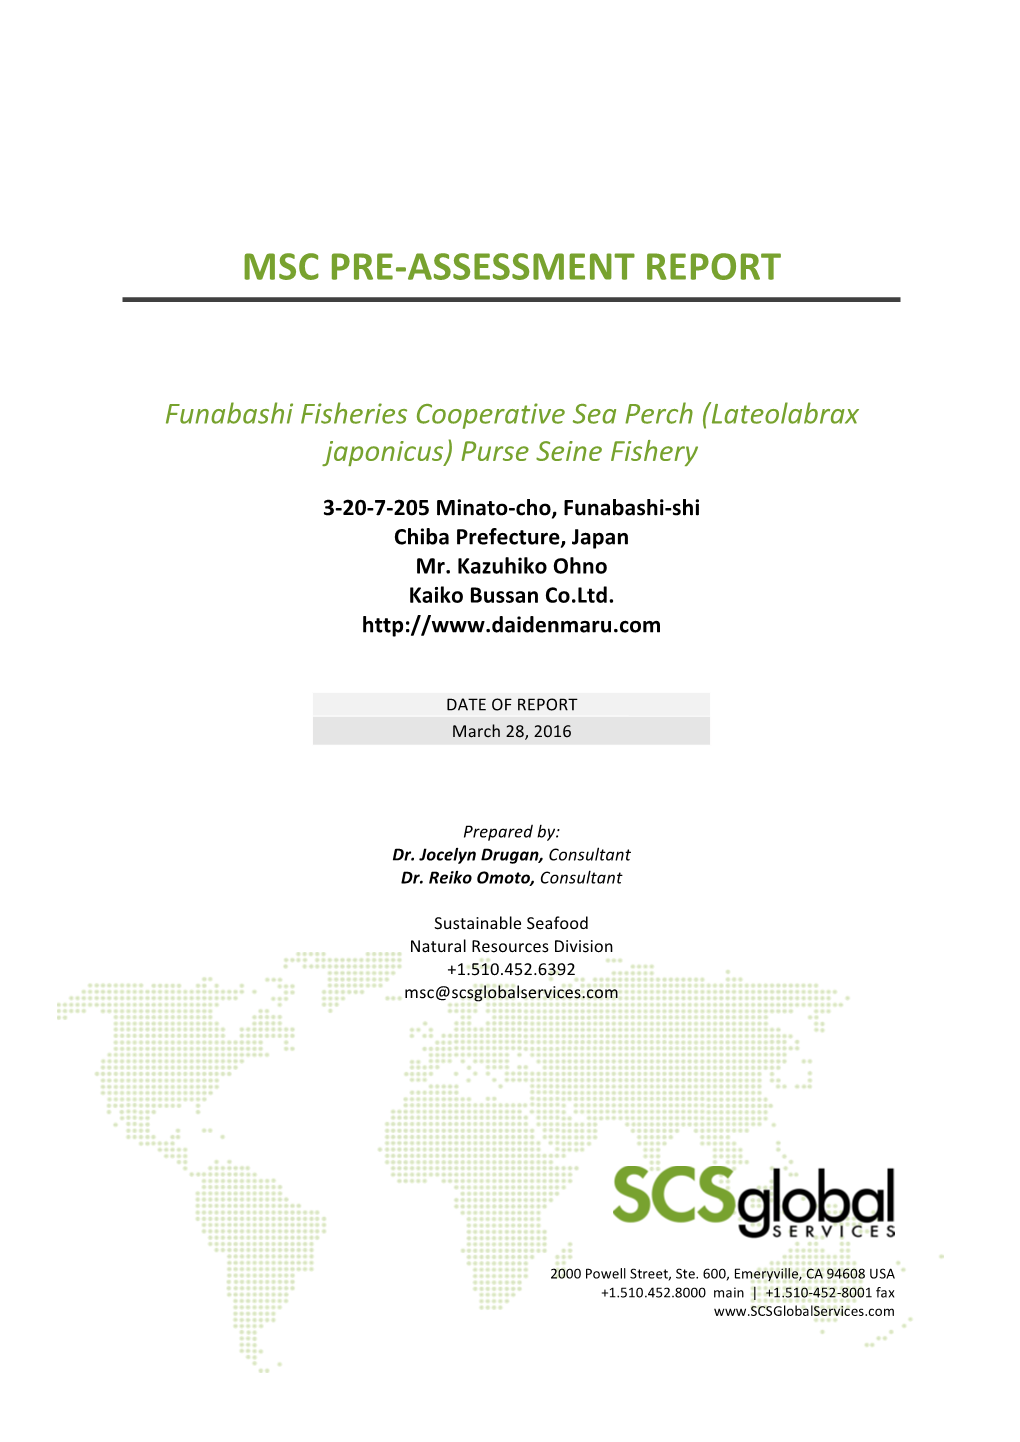 Msc Pre-Assessment Report